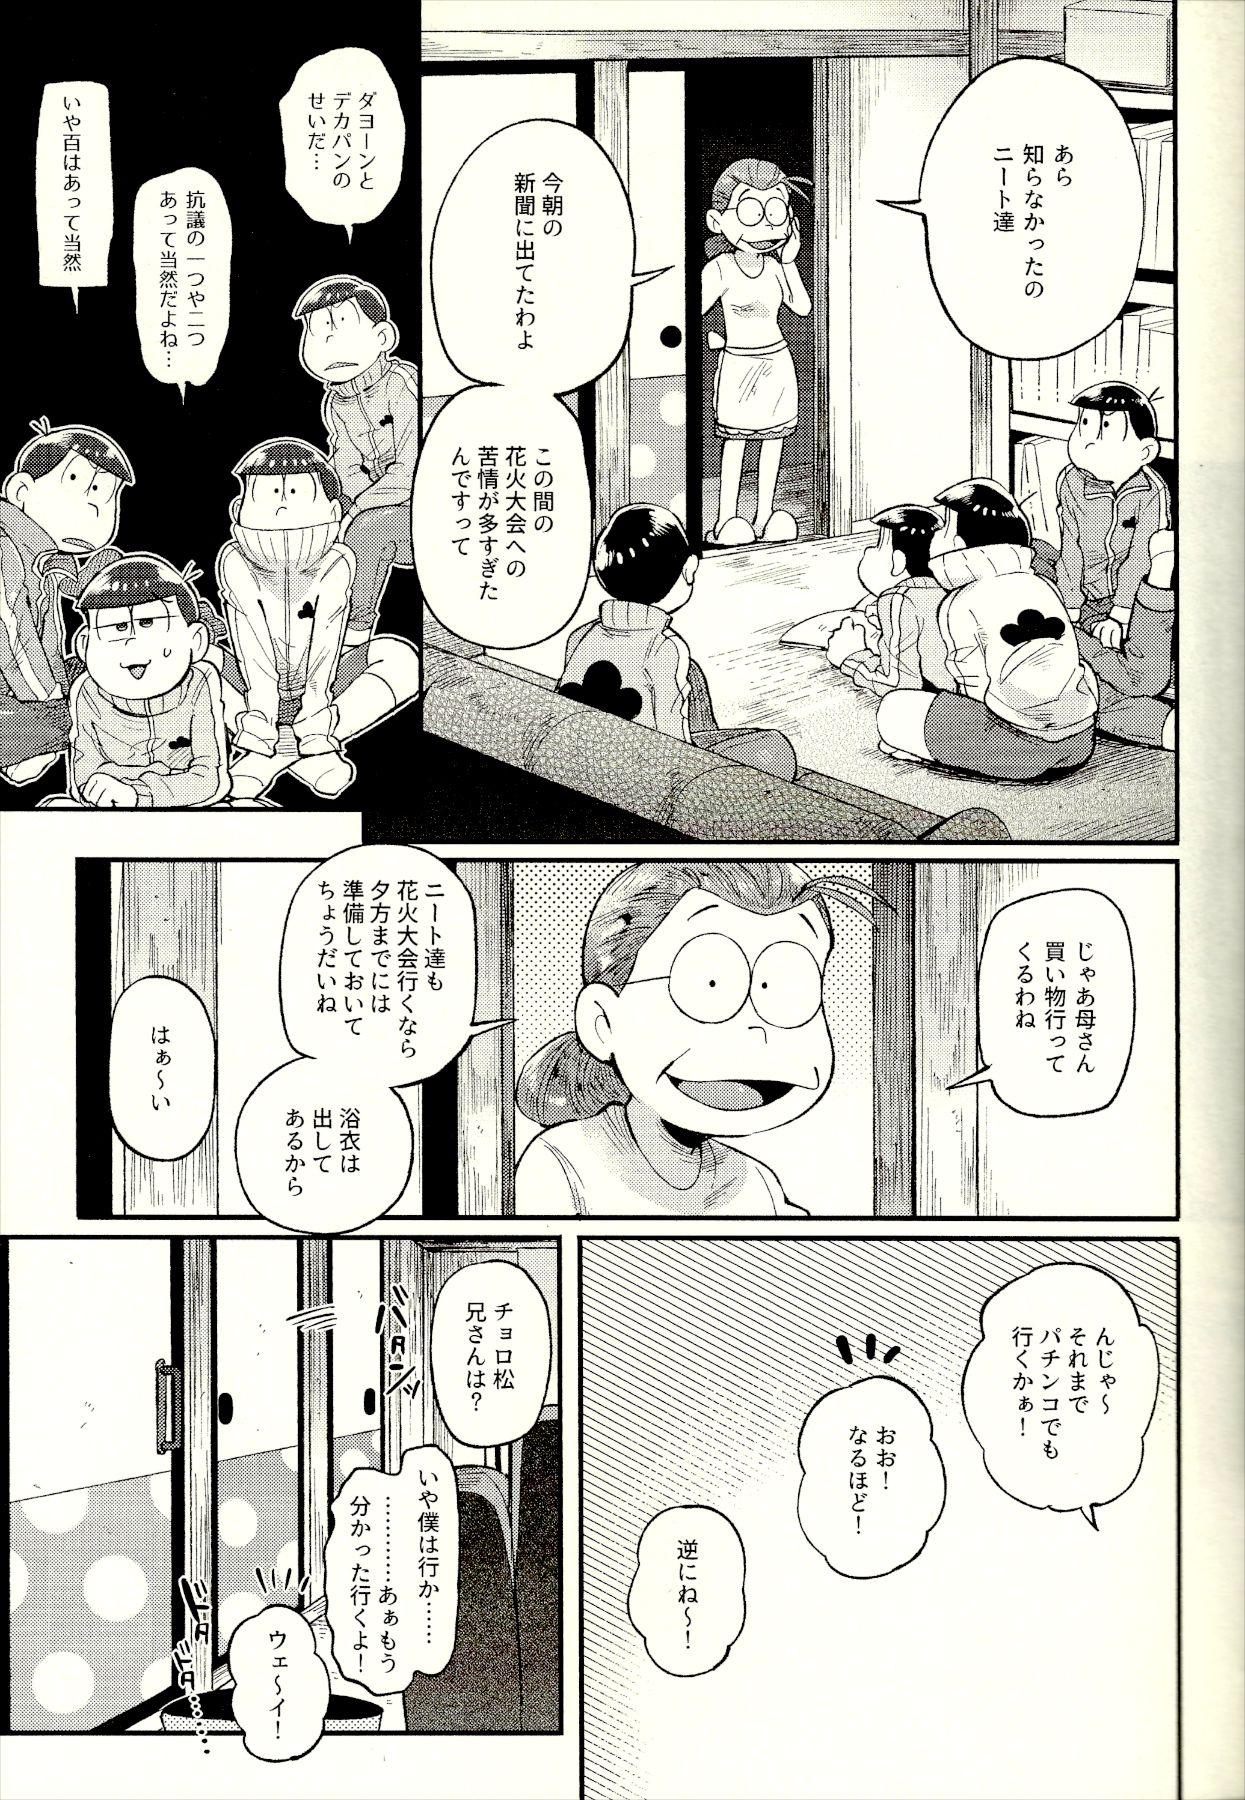 Puba Season in the Summer - Osomatsu-san Loira - Page 5